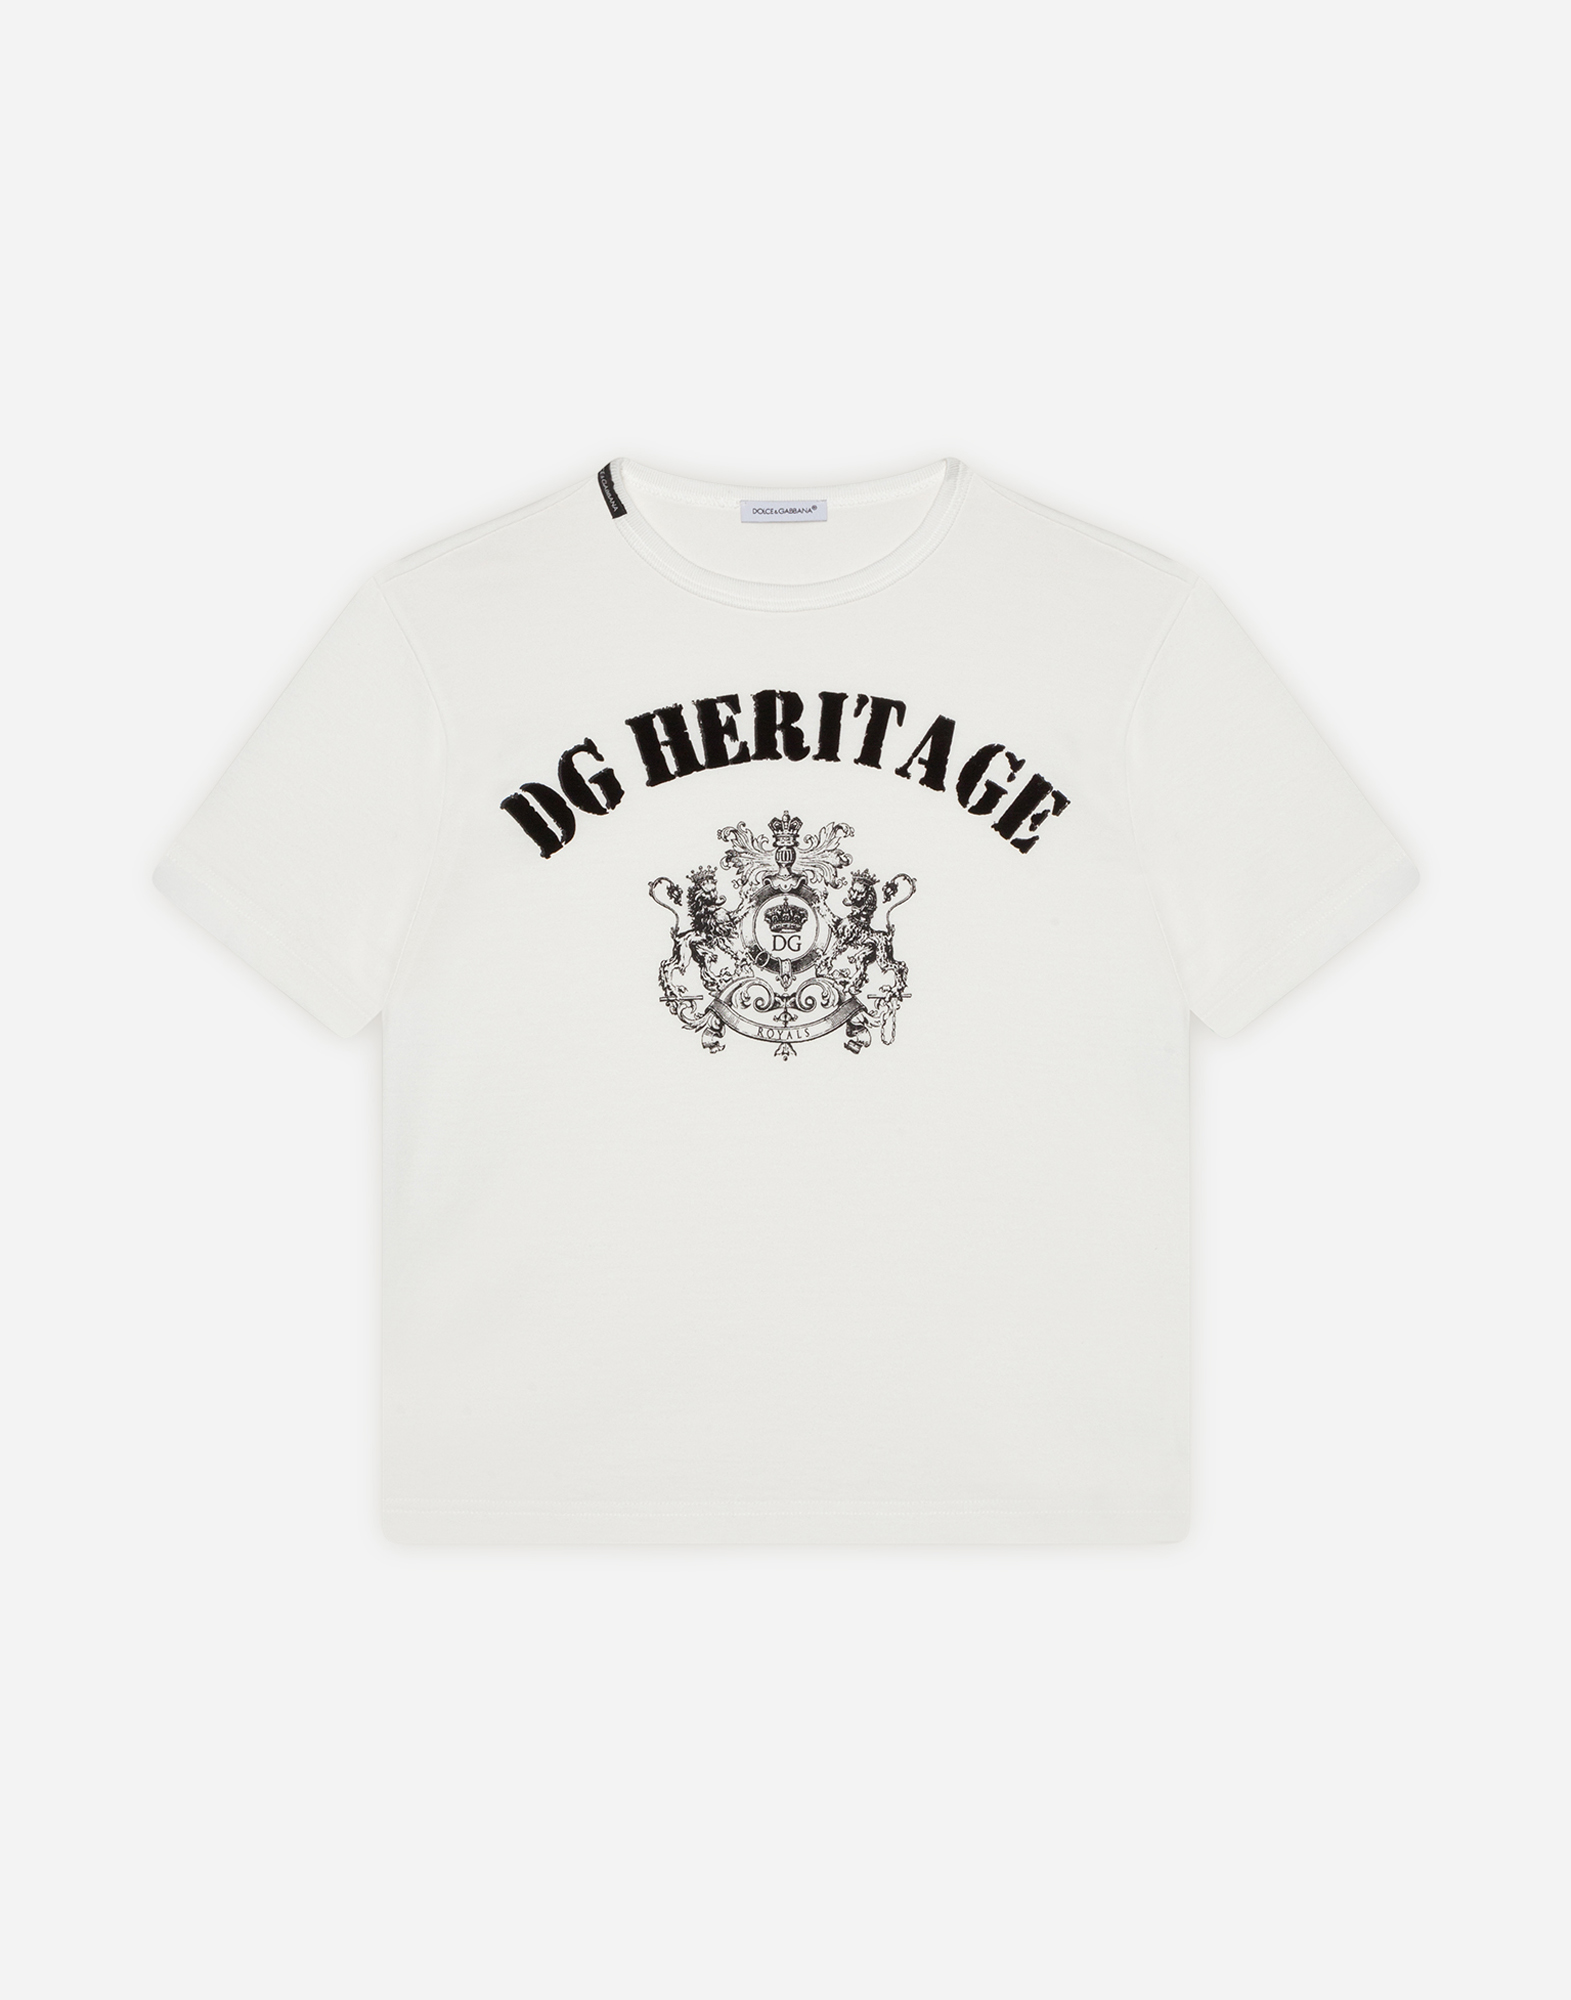 Dolce & Gabbana Kids' Jersey T-shirt With Dg Heritage Print